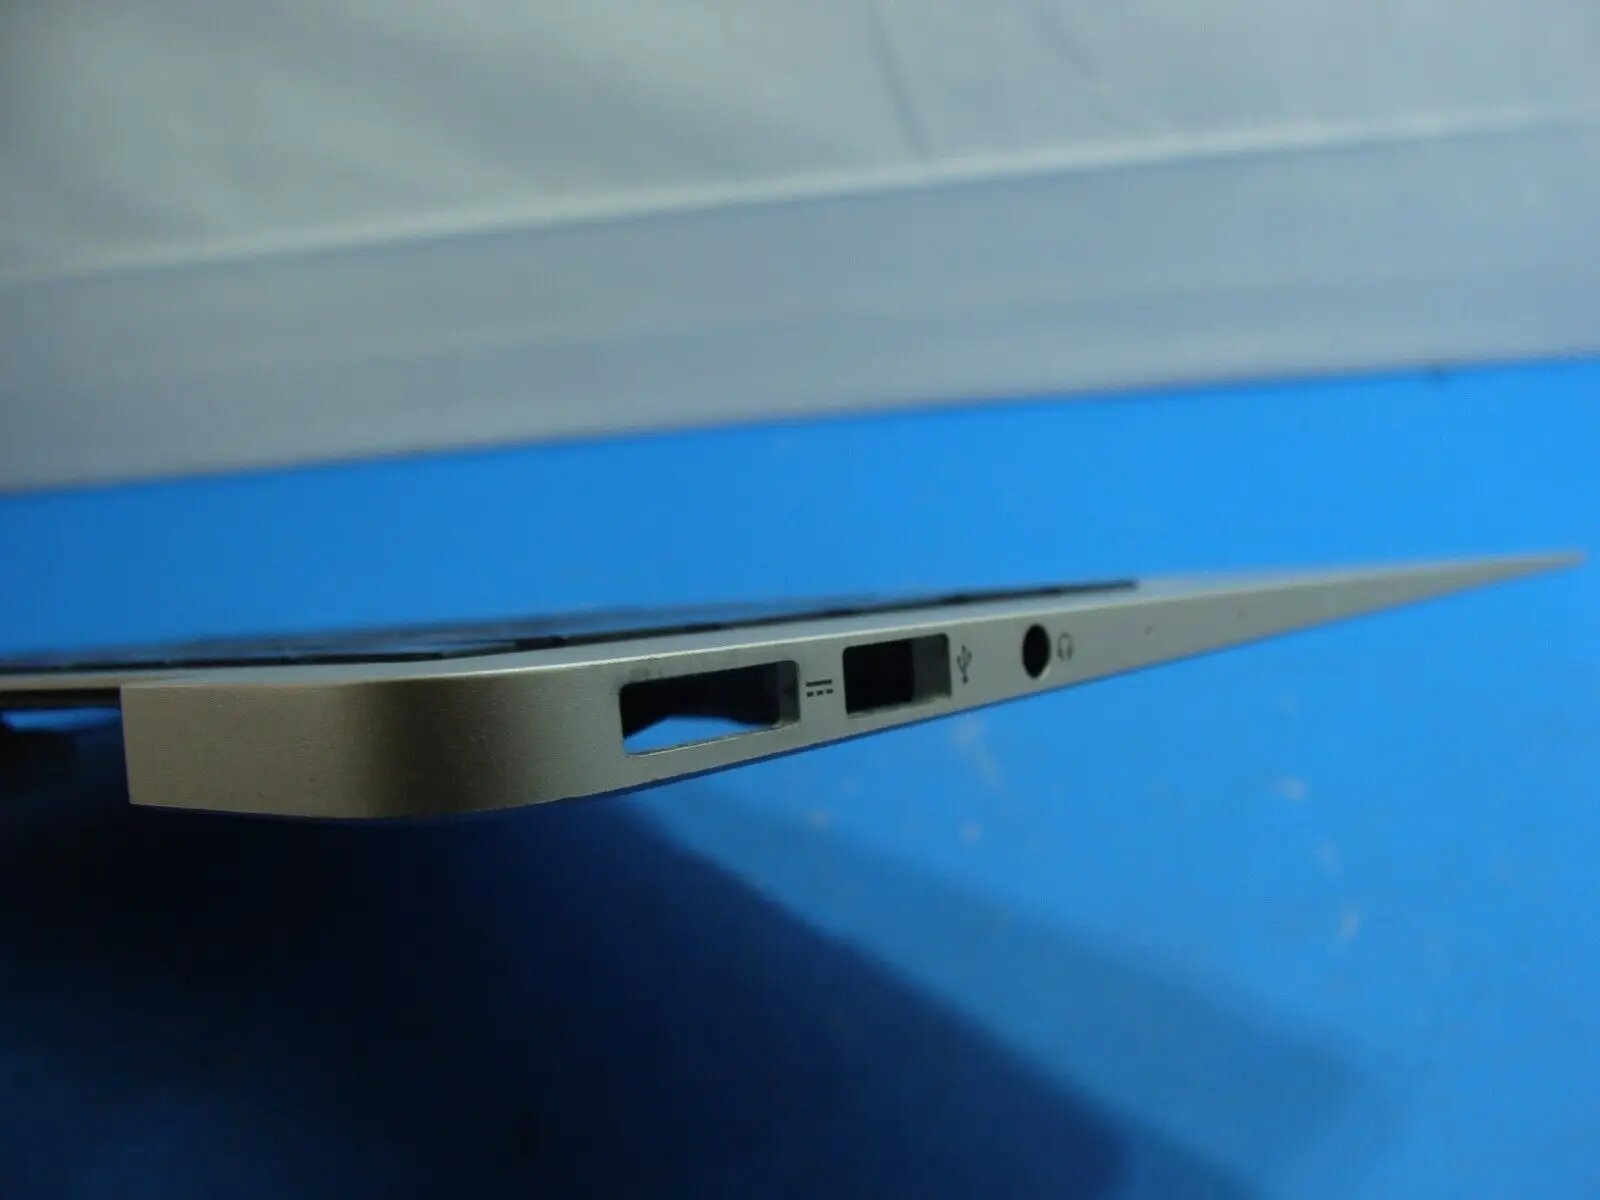 MacBook Air 13 A1466 2014 MD760LL/B Top Case w/BL Keyboard TrackPad 661-7480